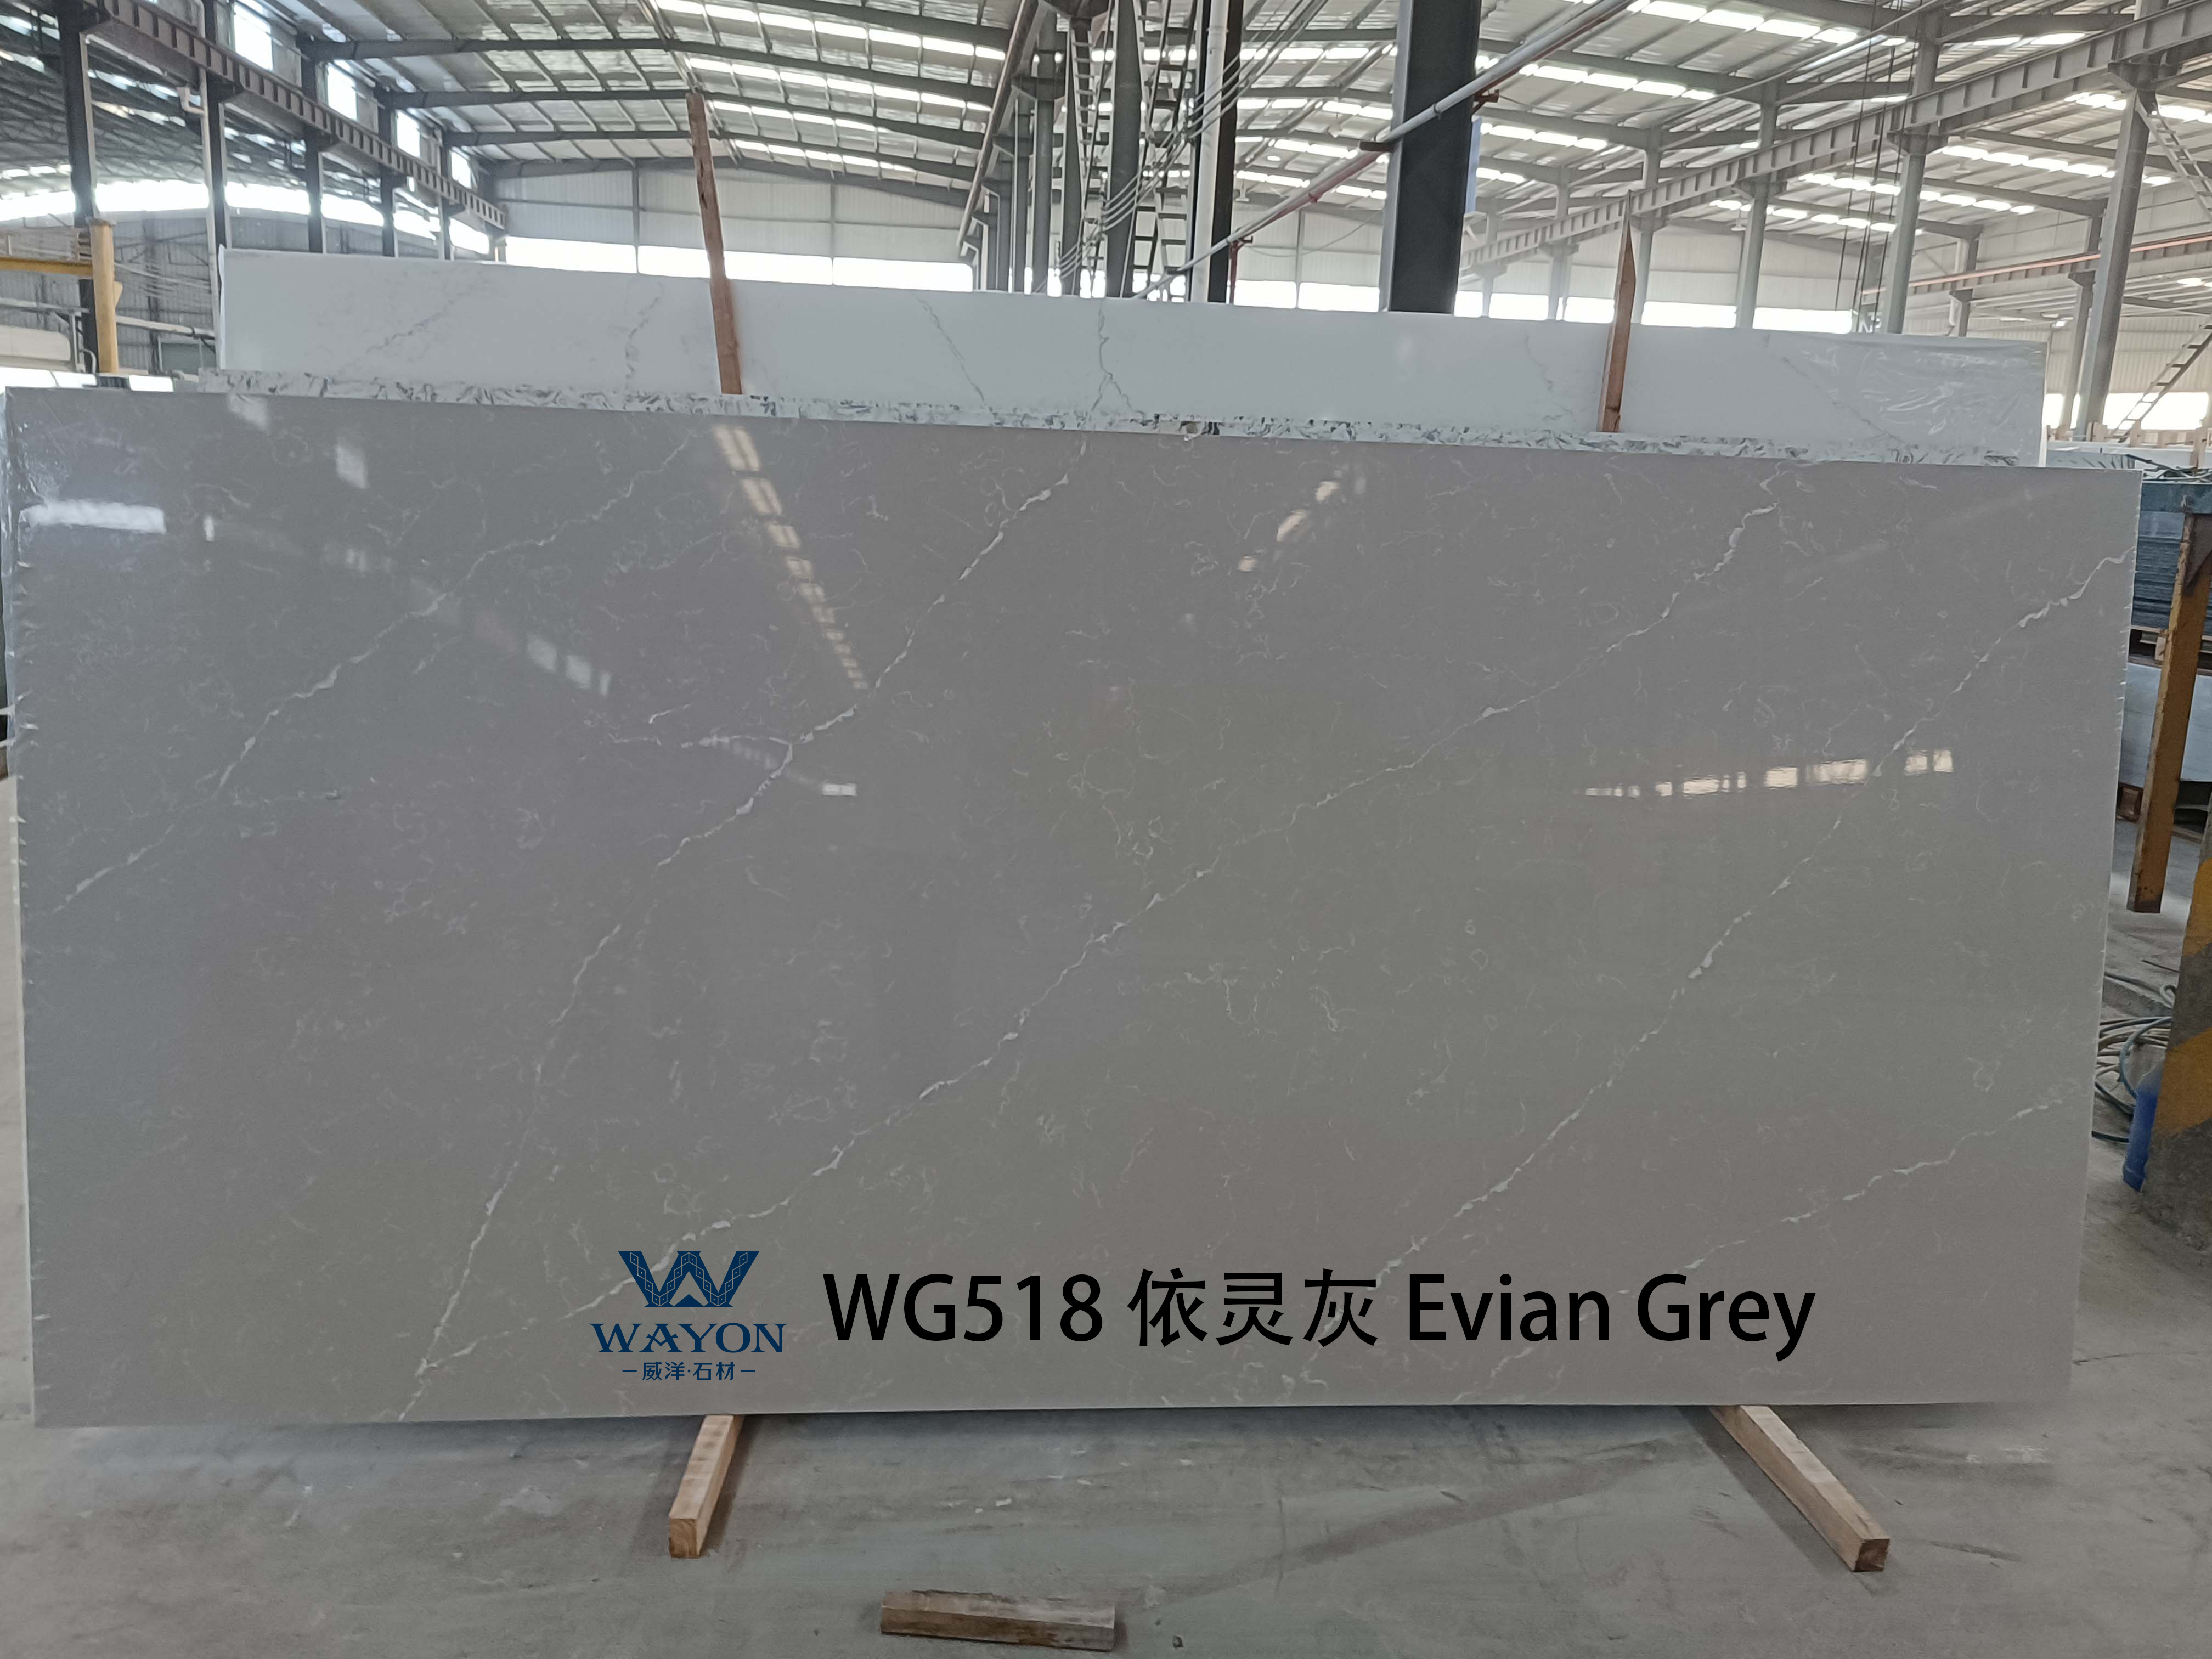 WG518 Evian Grey